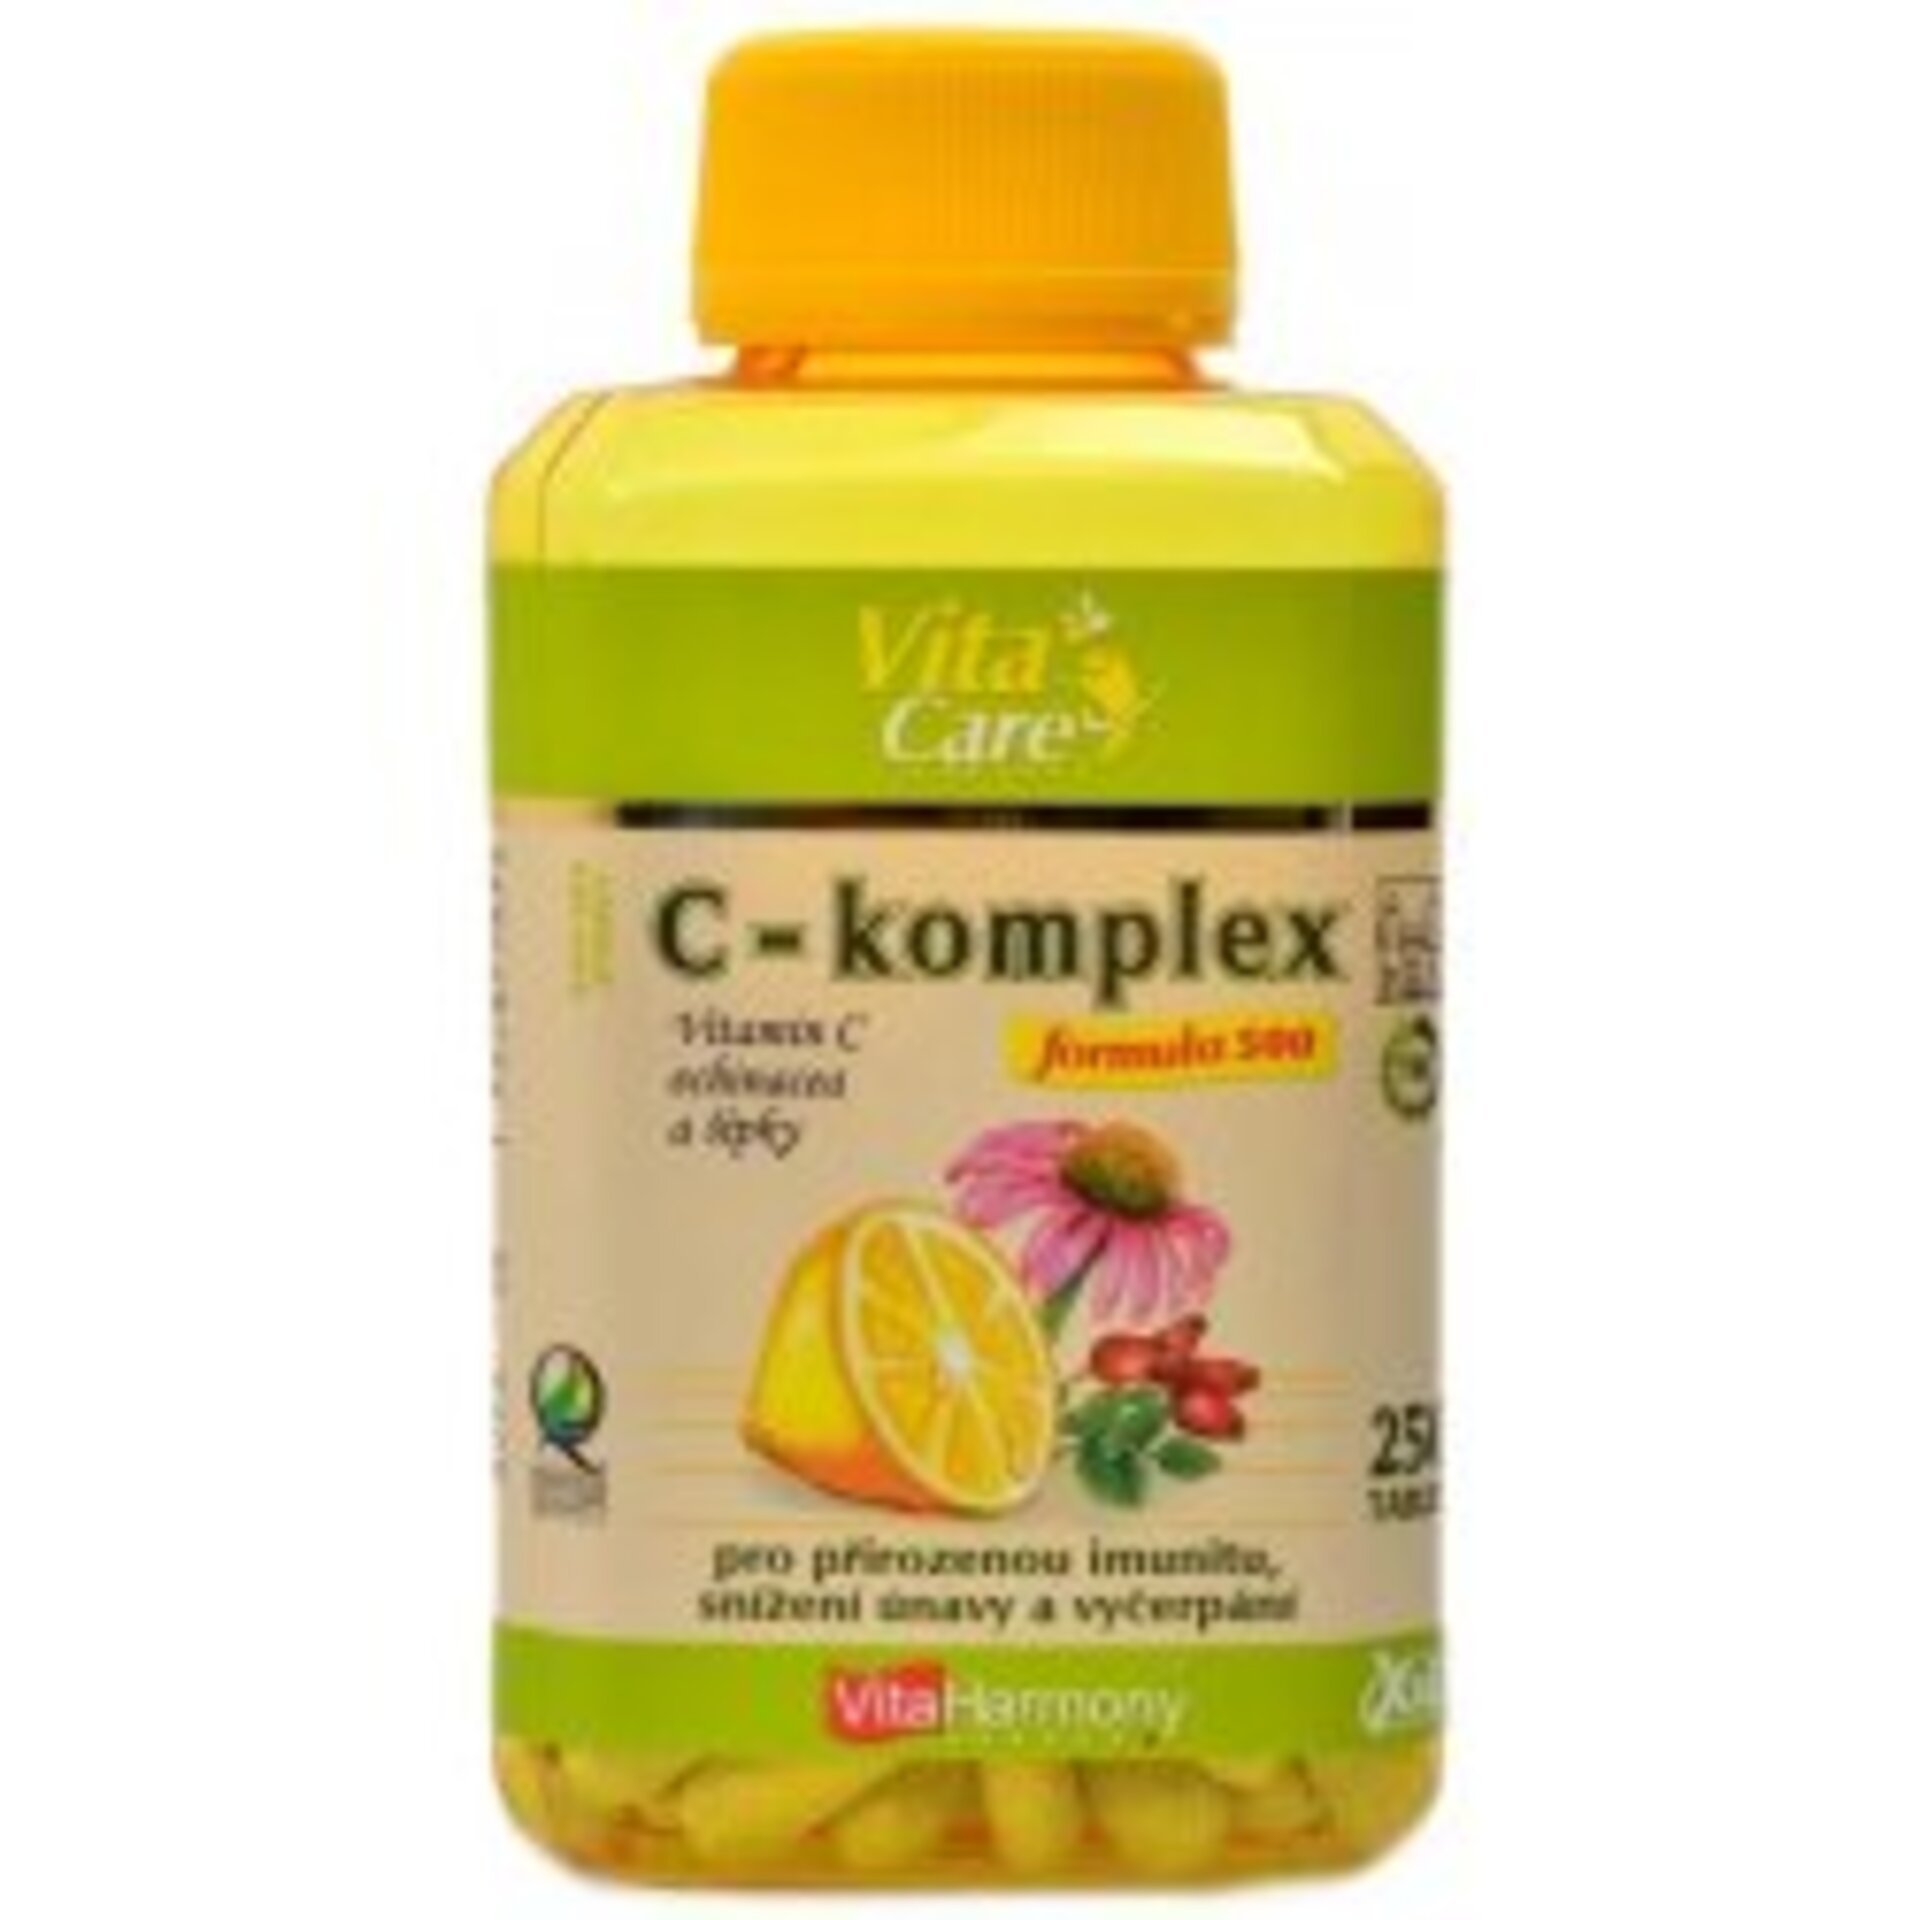 VitaHarmony C-komplex formula 500 XXL 250 tablet